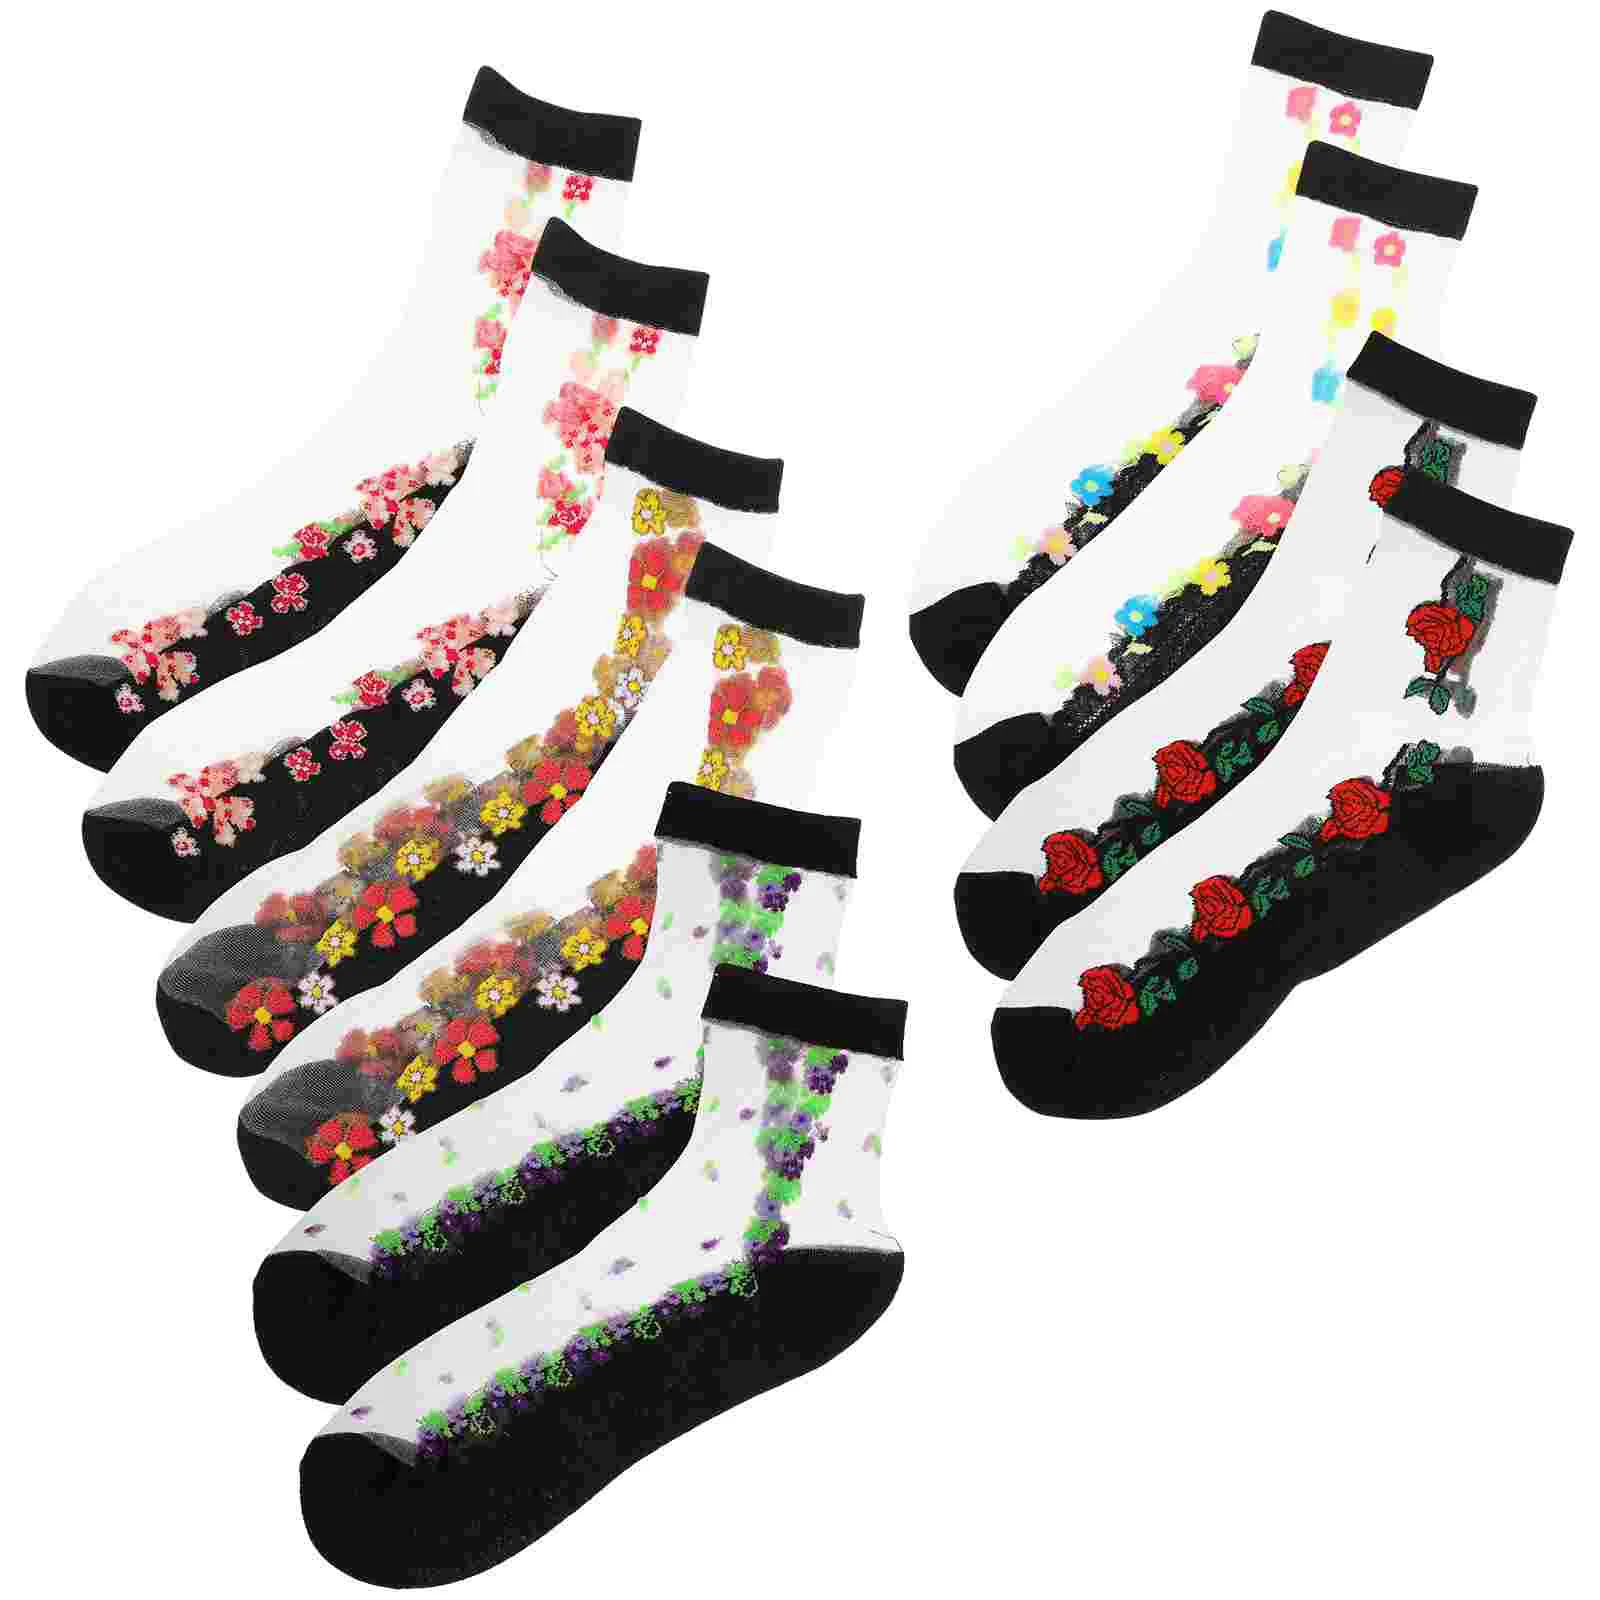 

5 Pairs Summer Female Thin Anti-Hook Silk Breathable Ankle Socks Short Embroidered Cotton Stockings (Black, Random Cute